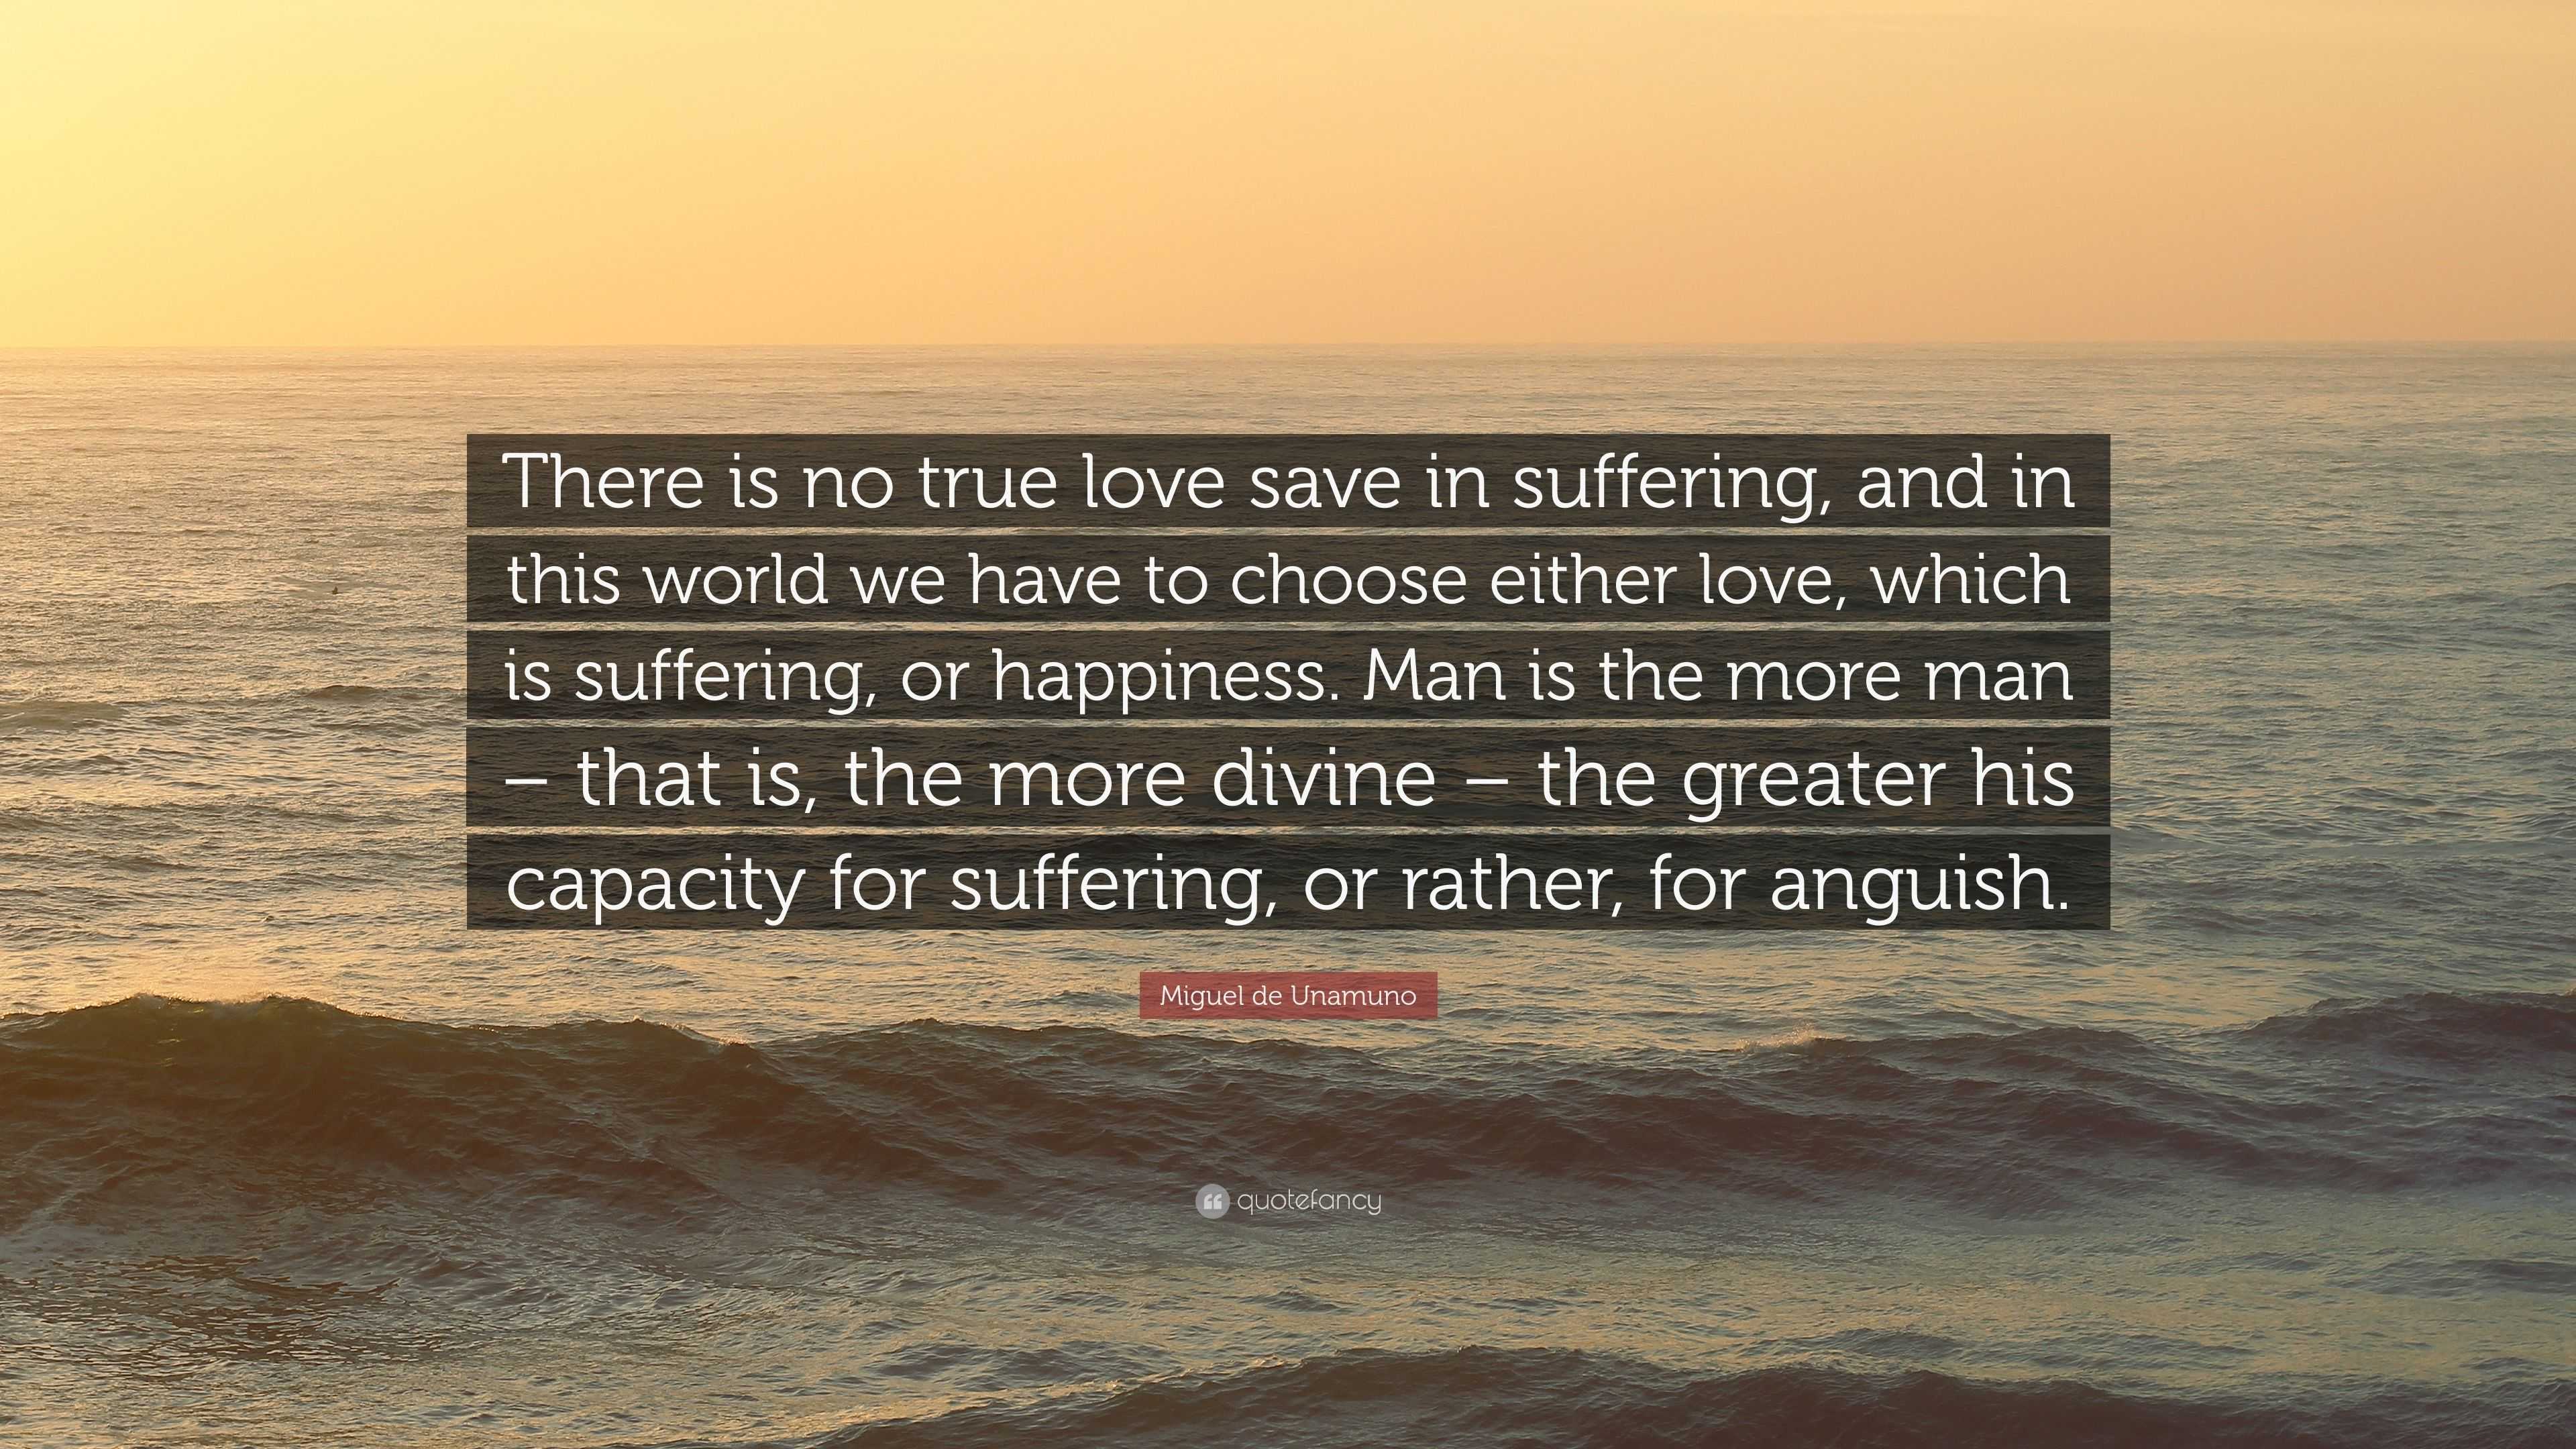 Miguel de Unamuno Quote “There is no true love save in suffering and